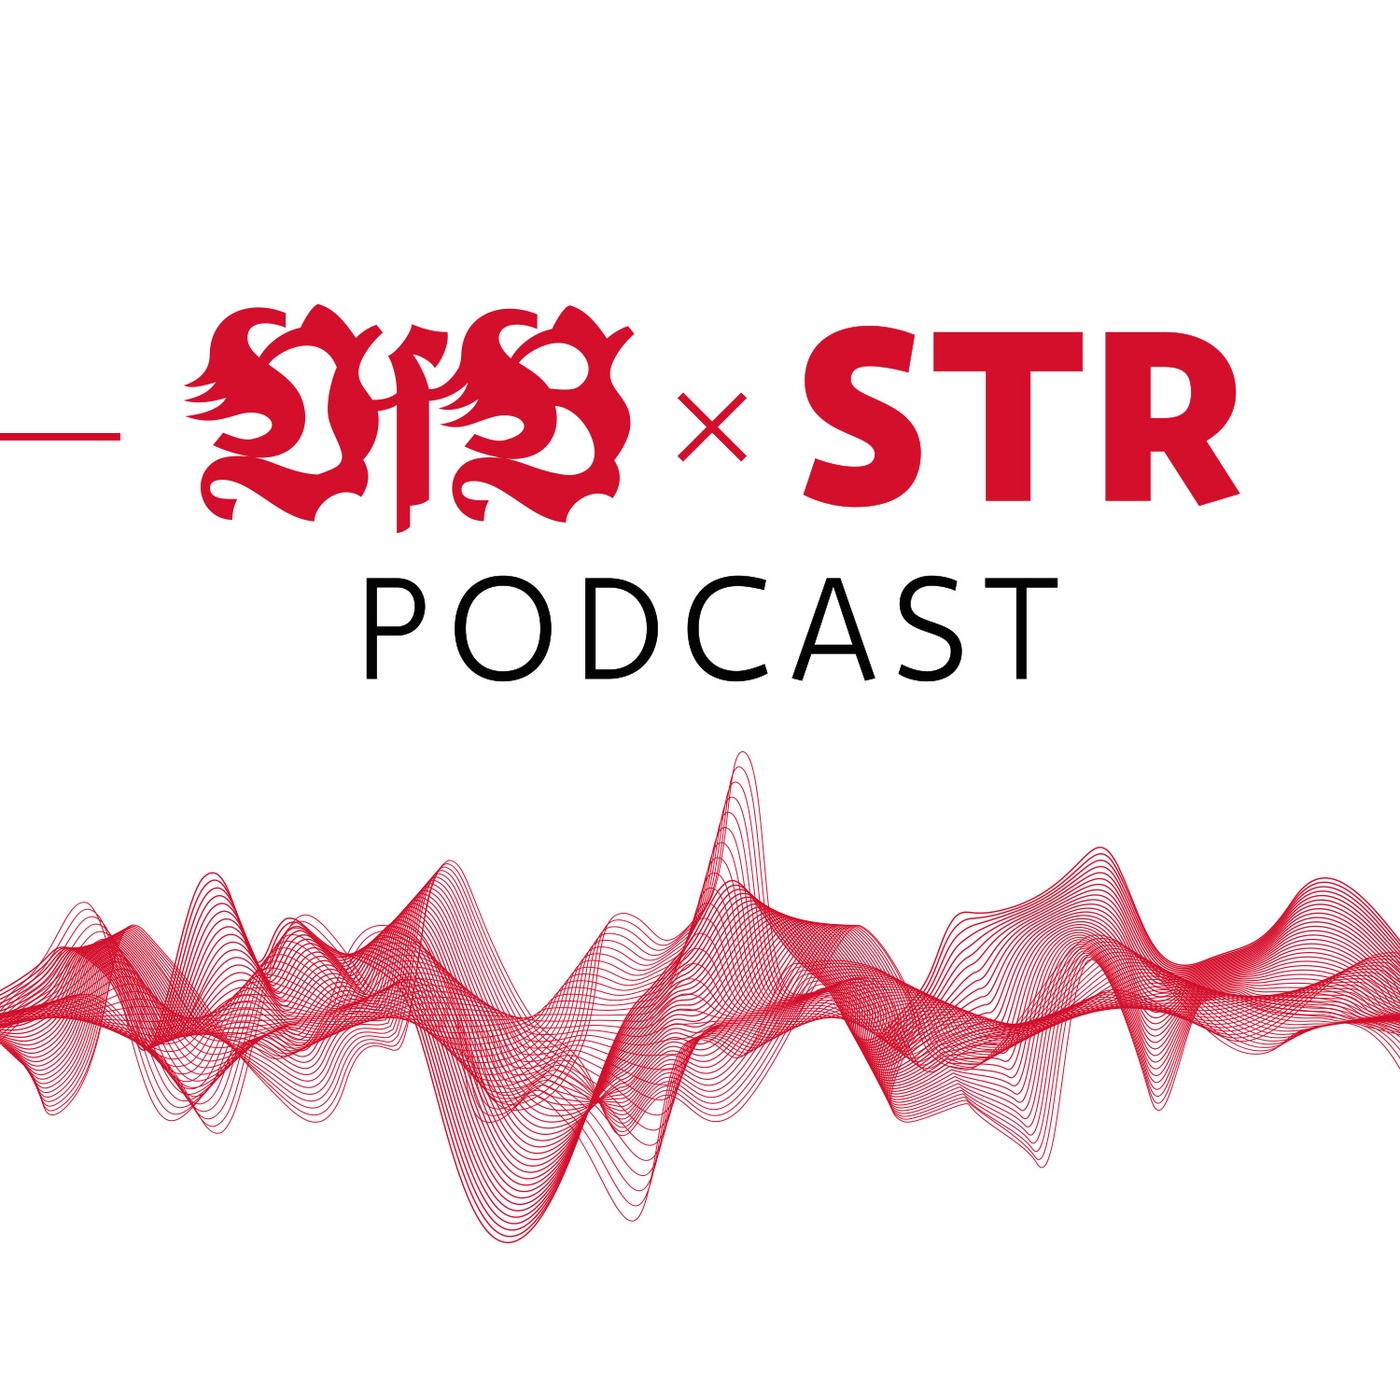 Folge 2 - Spitzenreiter, Spitzenreiter, hey, hey! - VfB x STR - Der Podcast  des VfB Stuttgart